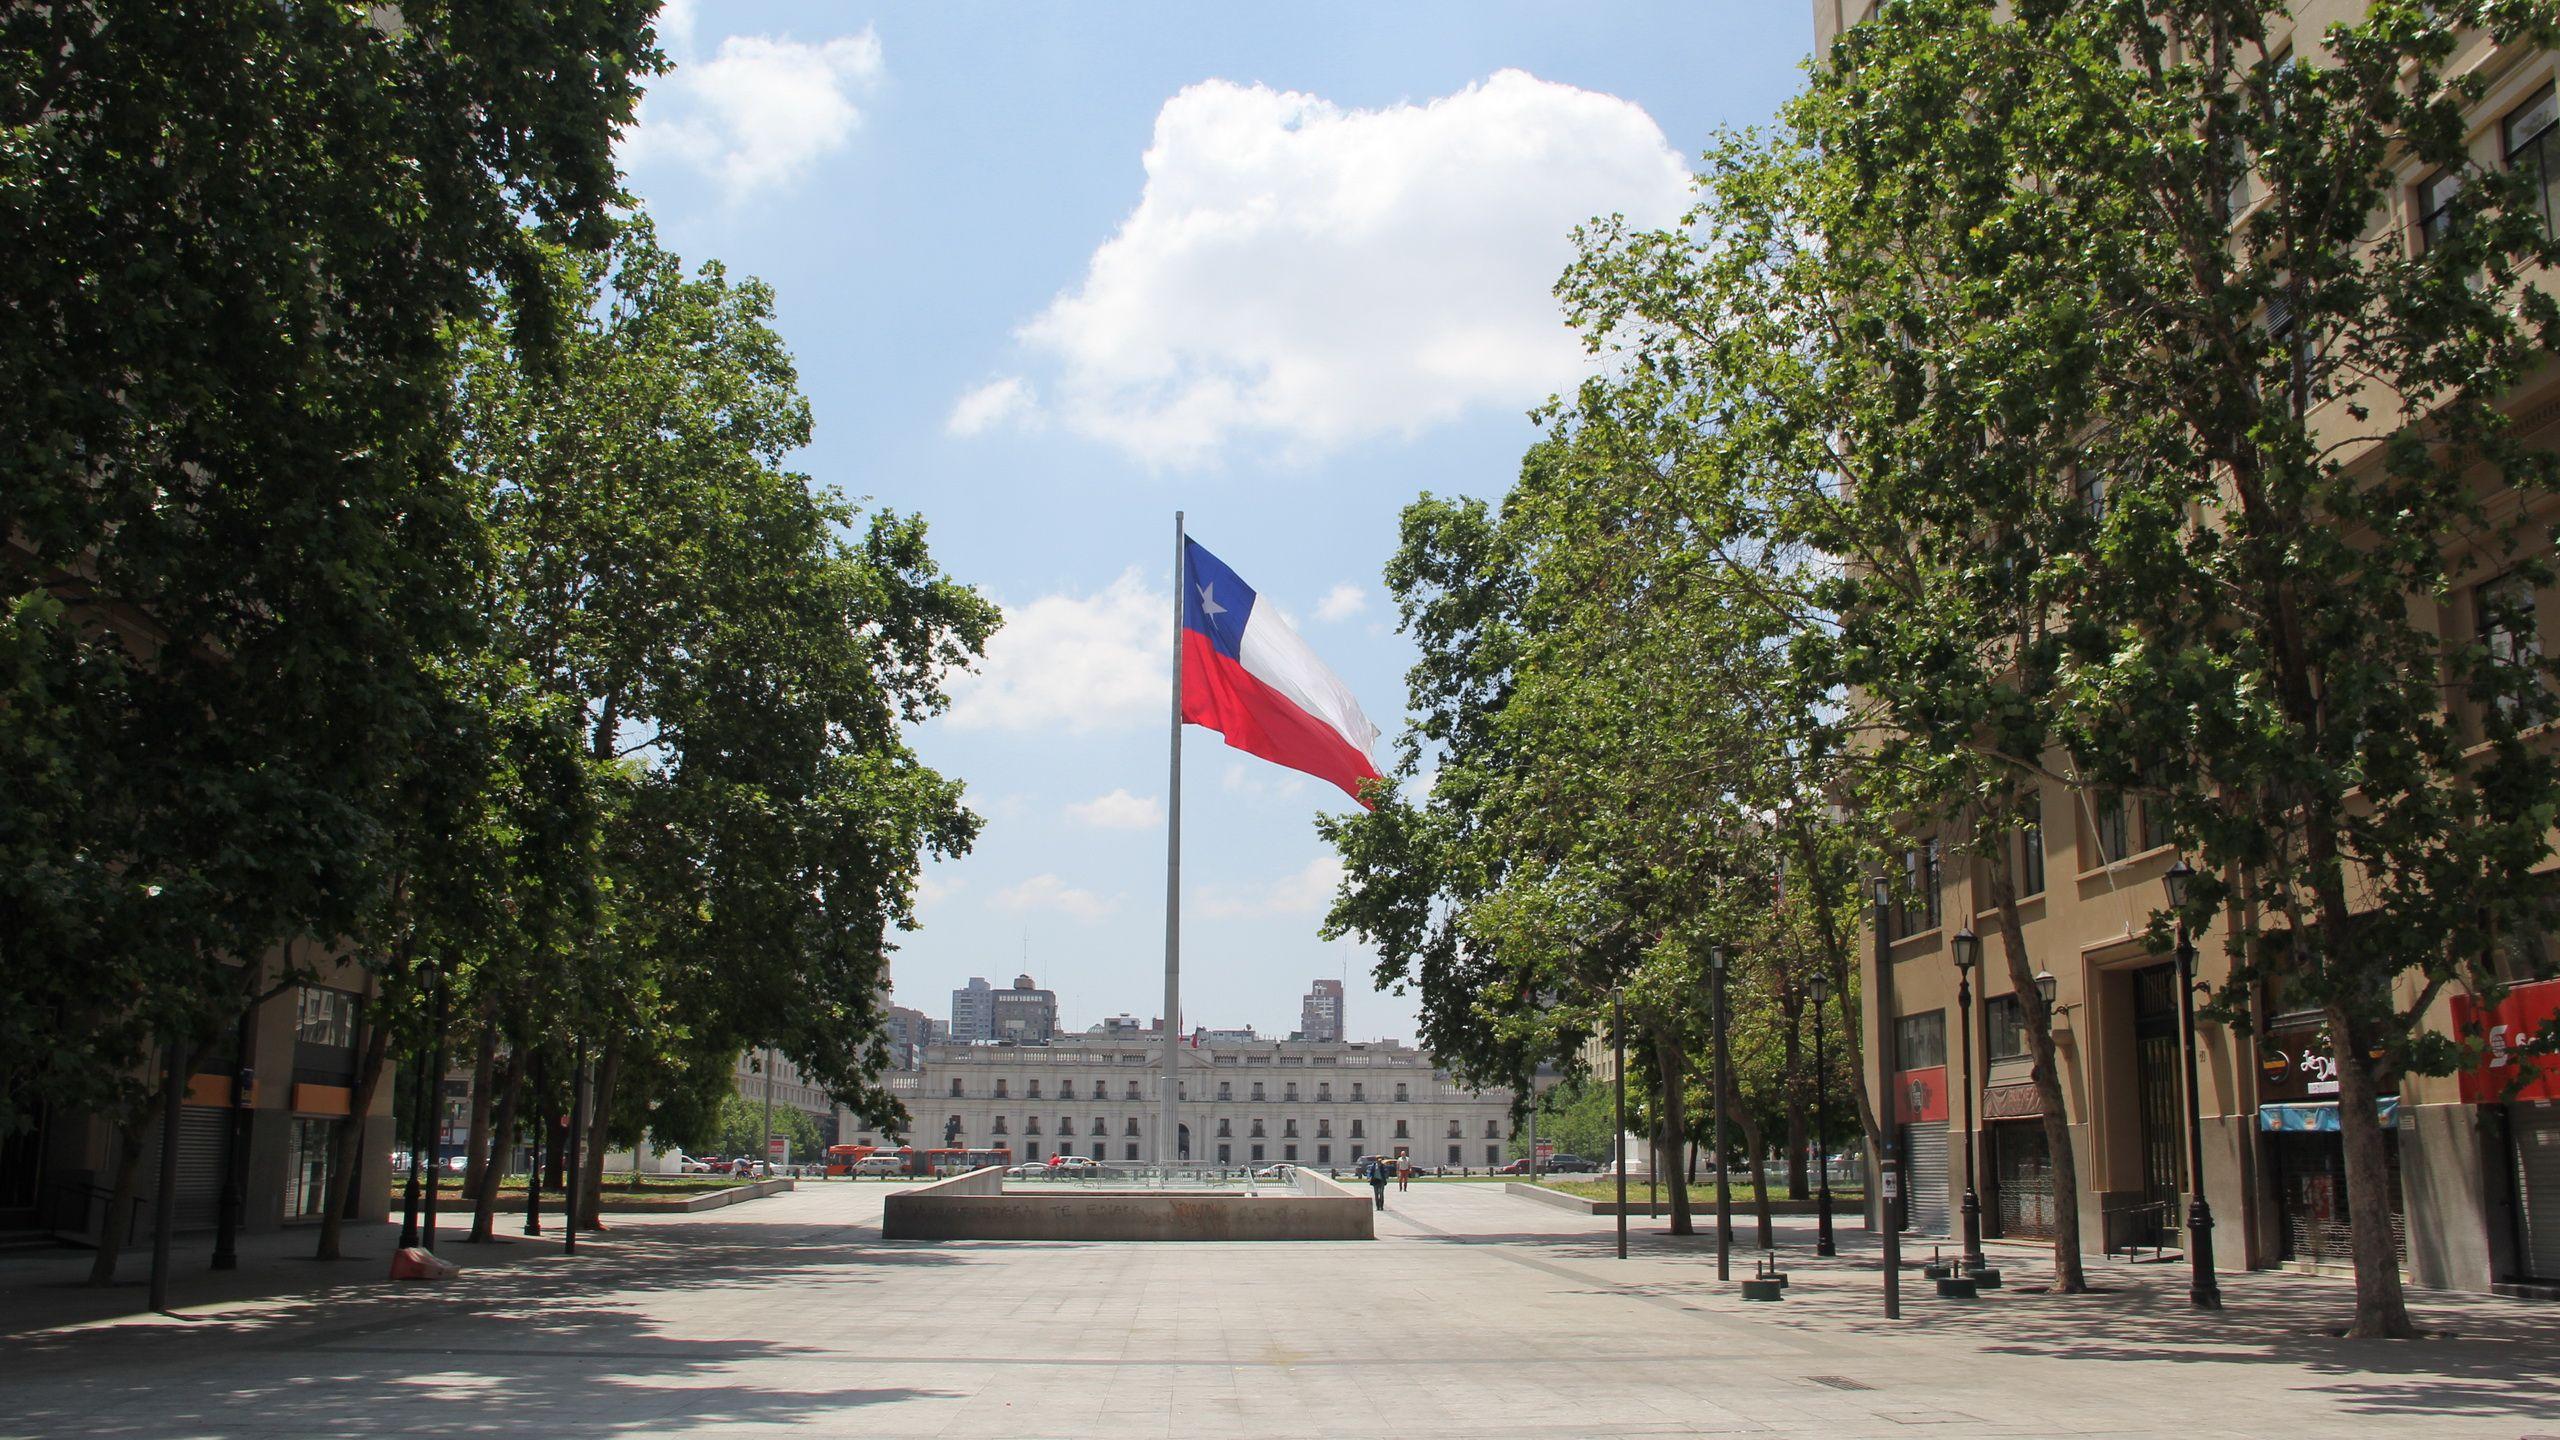 پرچم شیلی (Chile Flag)